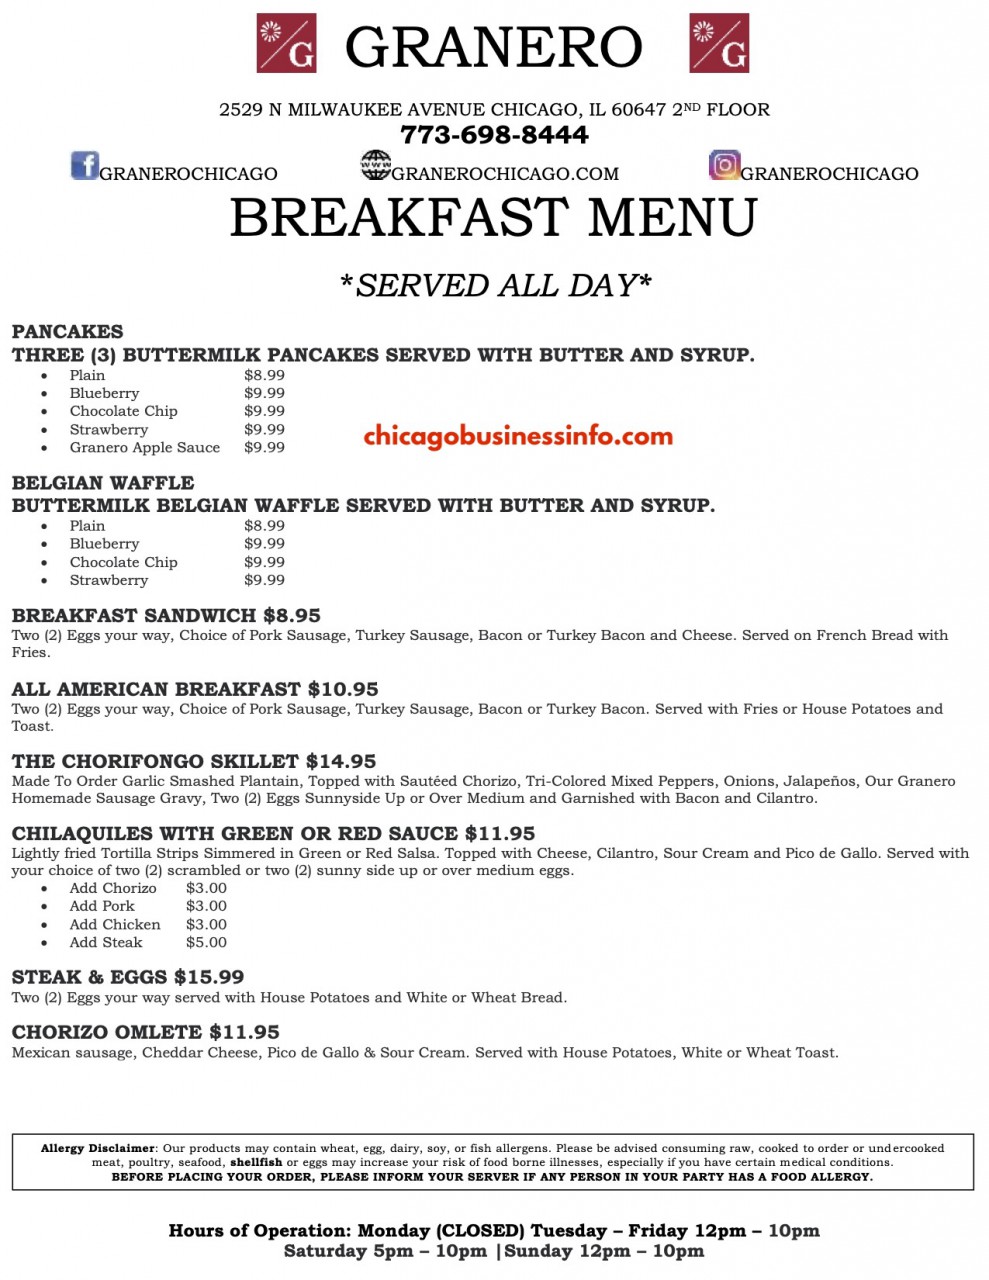 Granero chicago breakfast menu 1